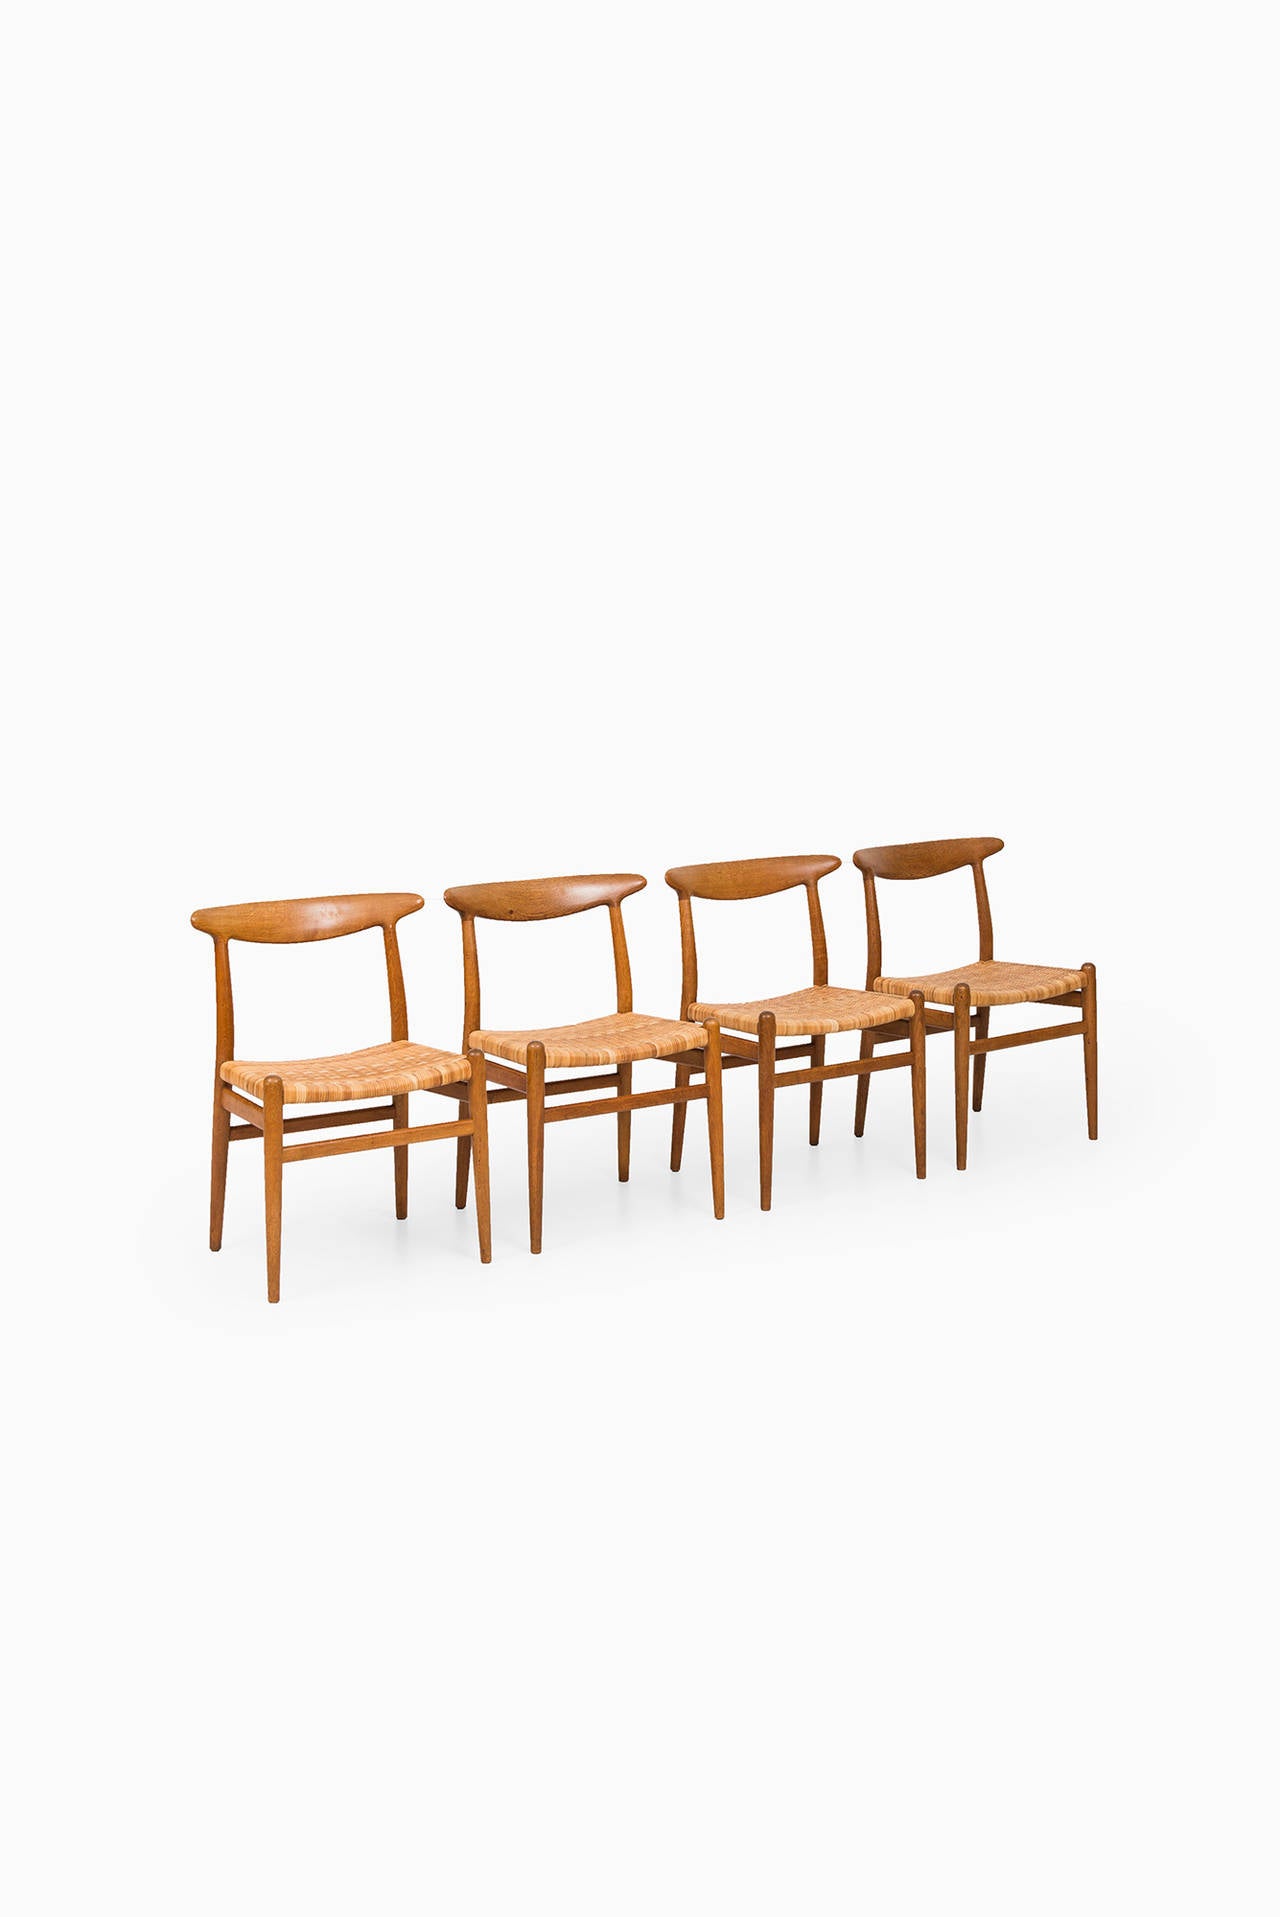 Mid-20th Century Hans Wegner Dining Chairs Model W2 by C.M Madsen in Denmark